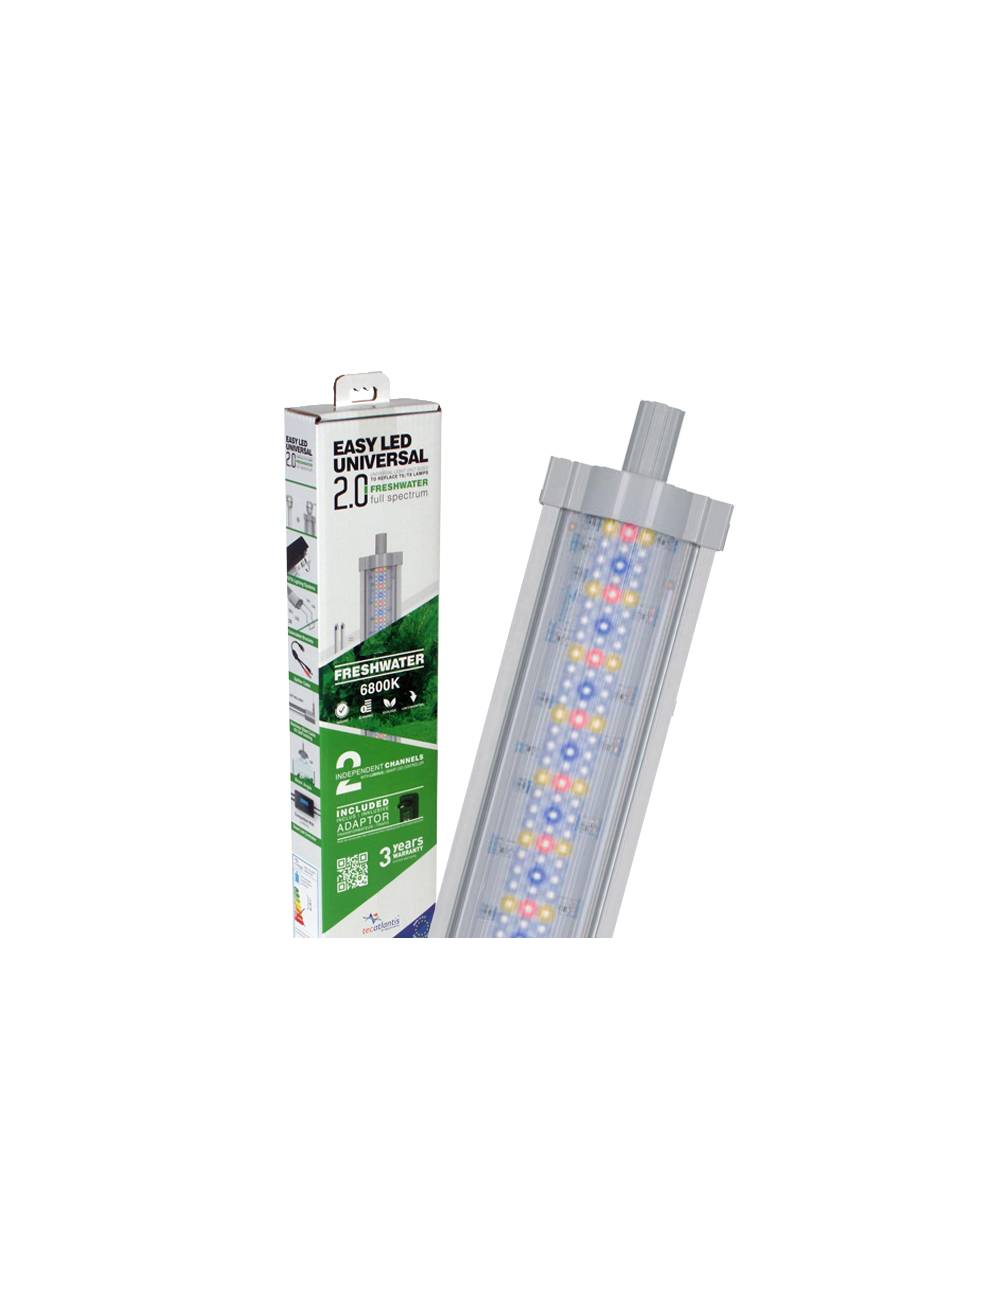 Zolux LED Light AQUAYA Blanc Plafonnier Touch Ec…